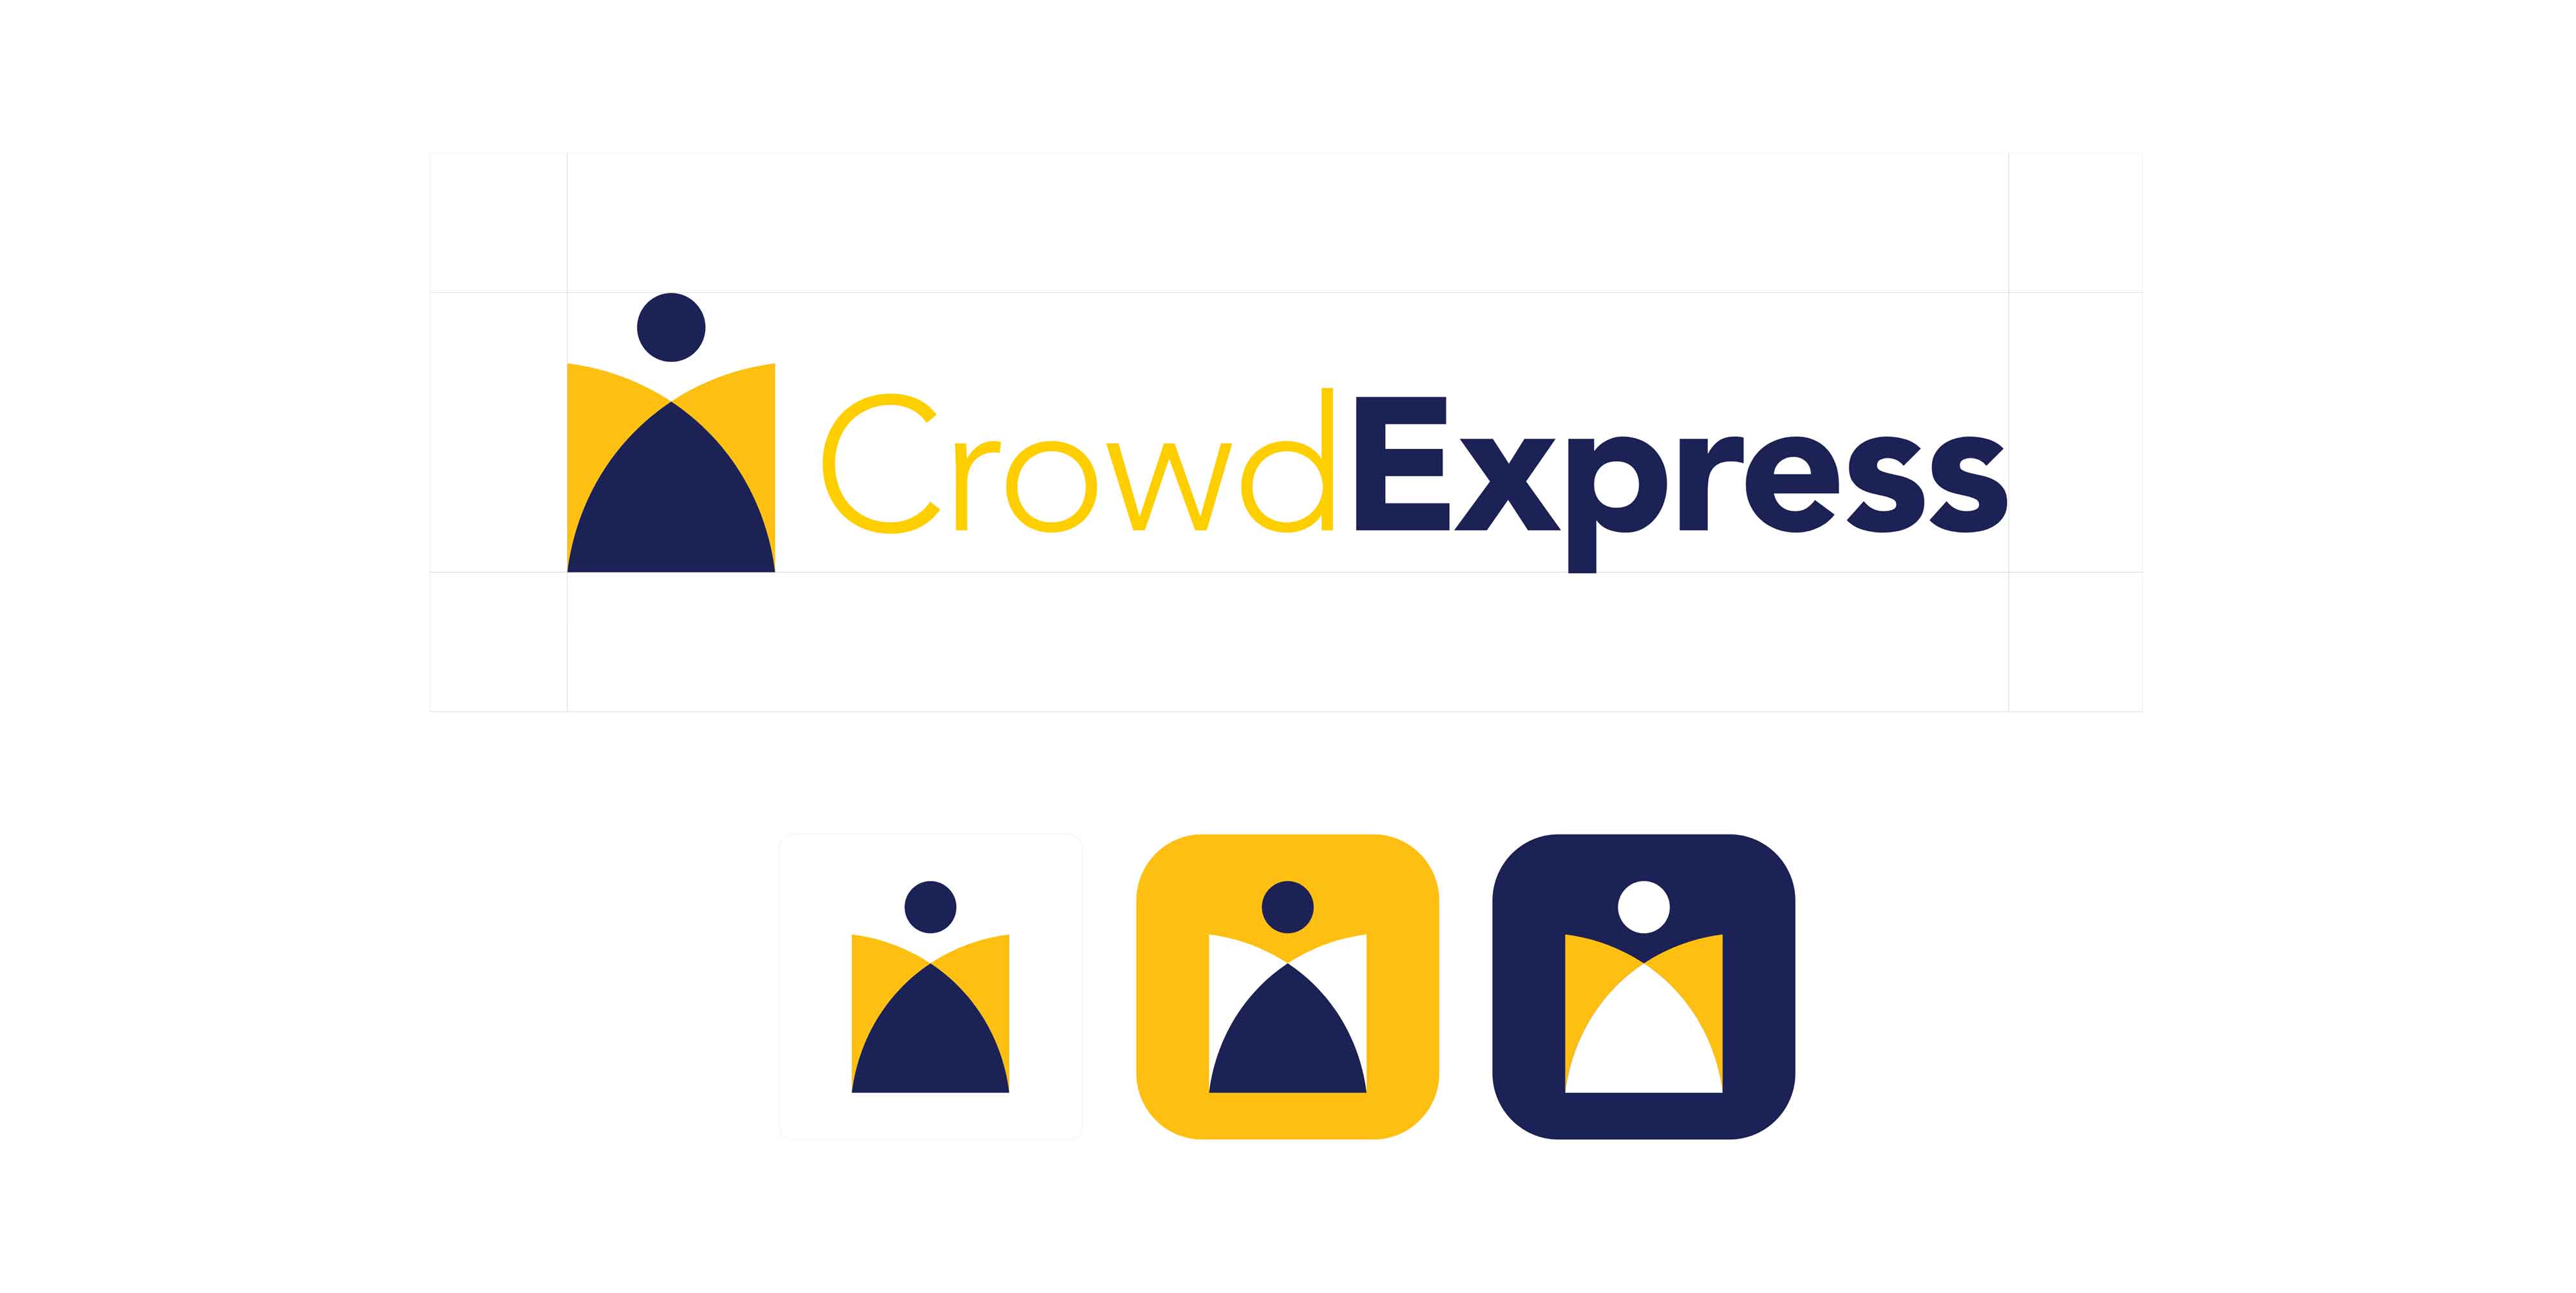 CrowdExpress desc